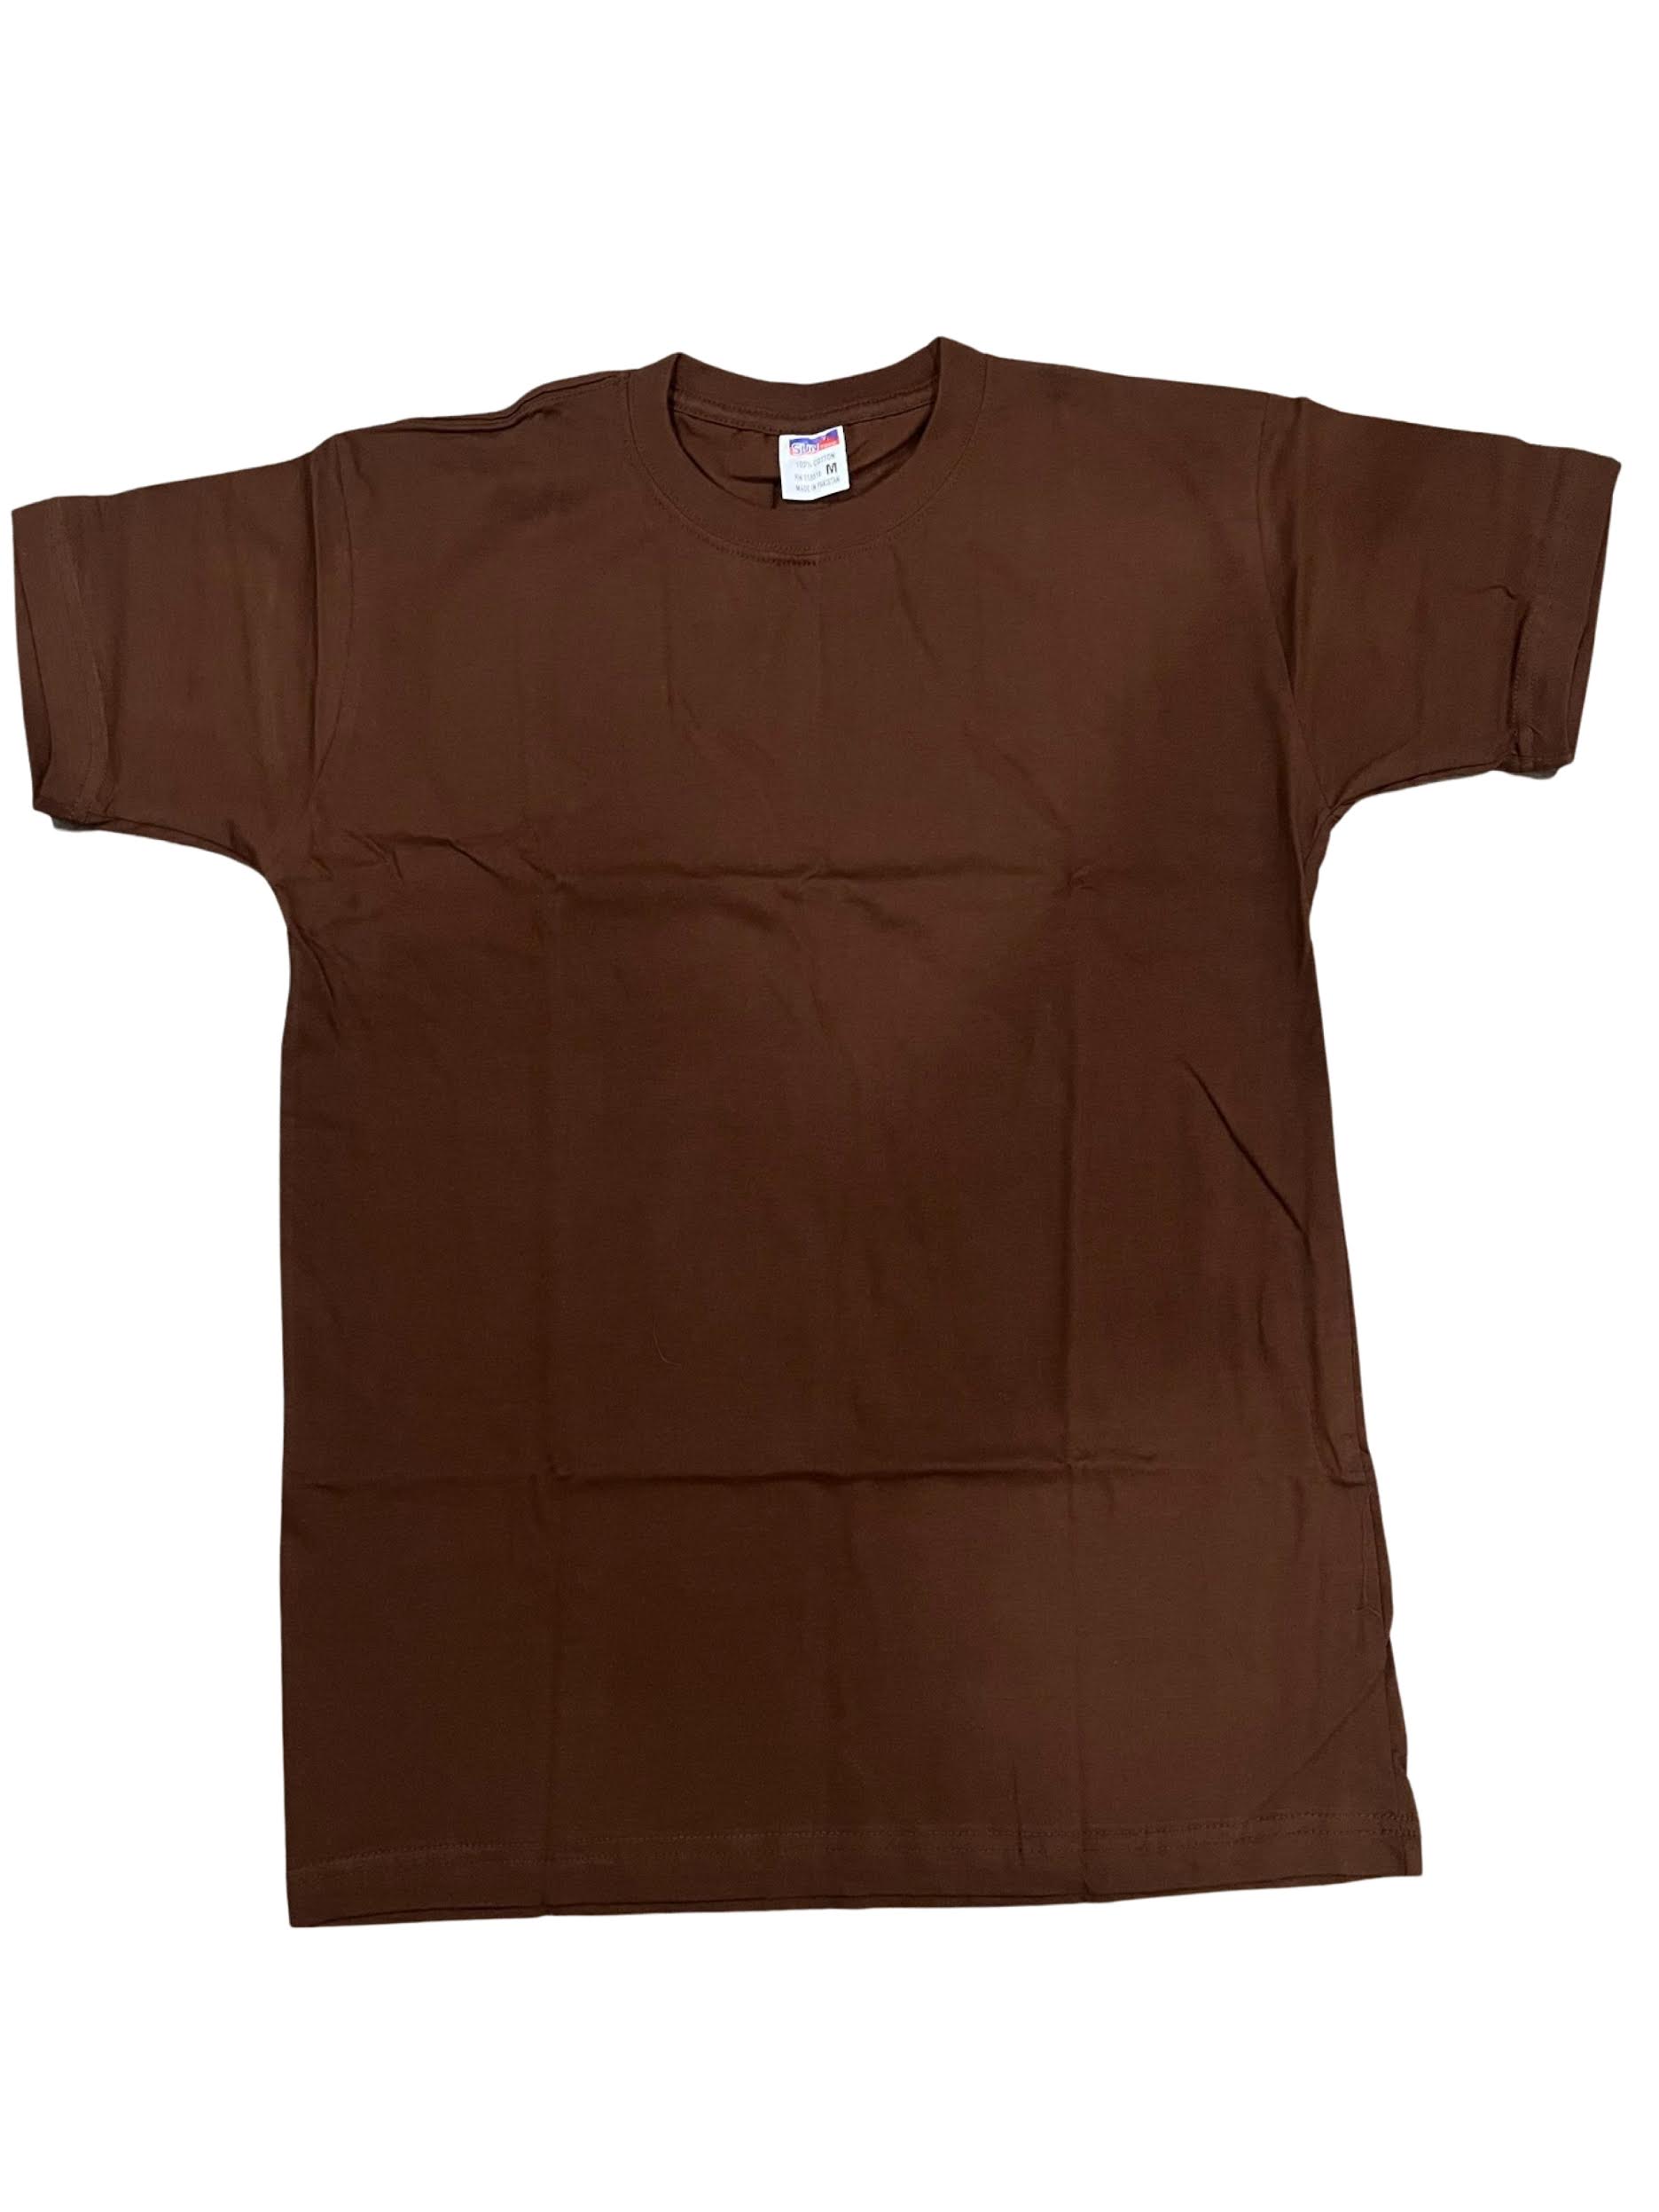 Brown Short Sleeve T-shirts